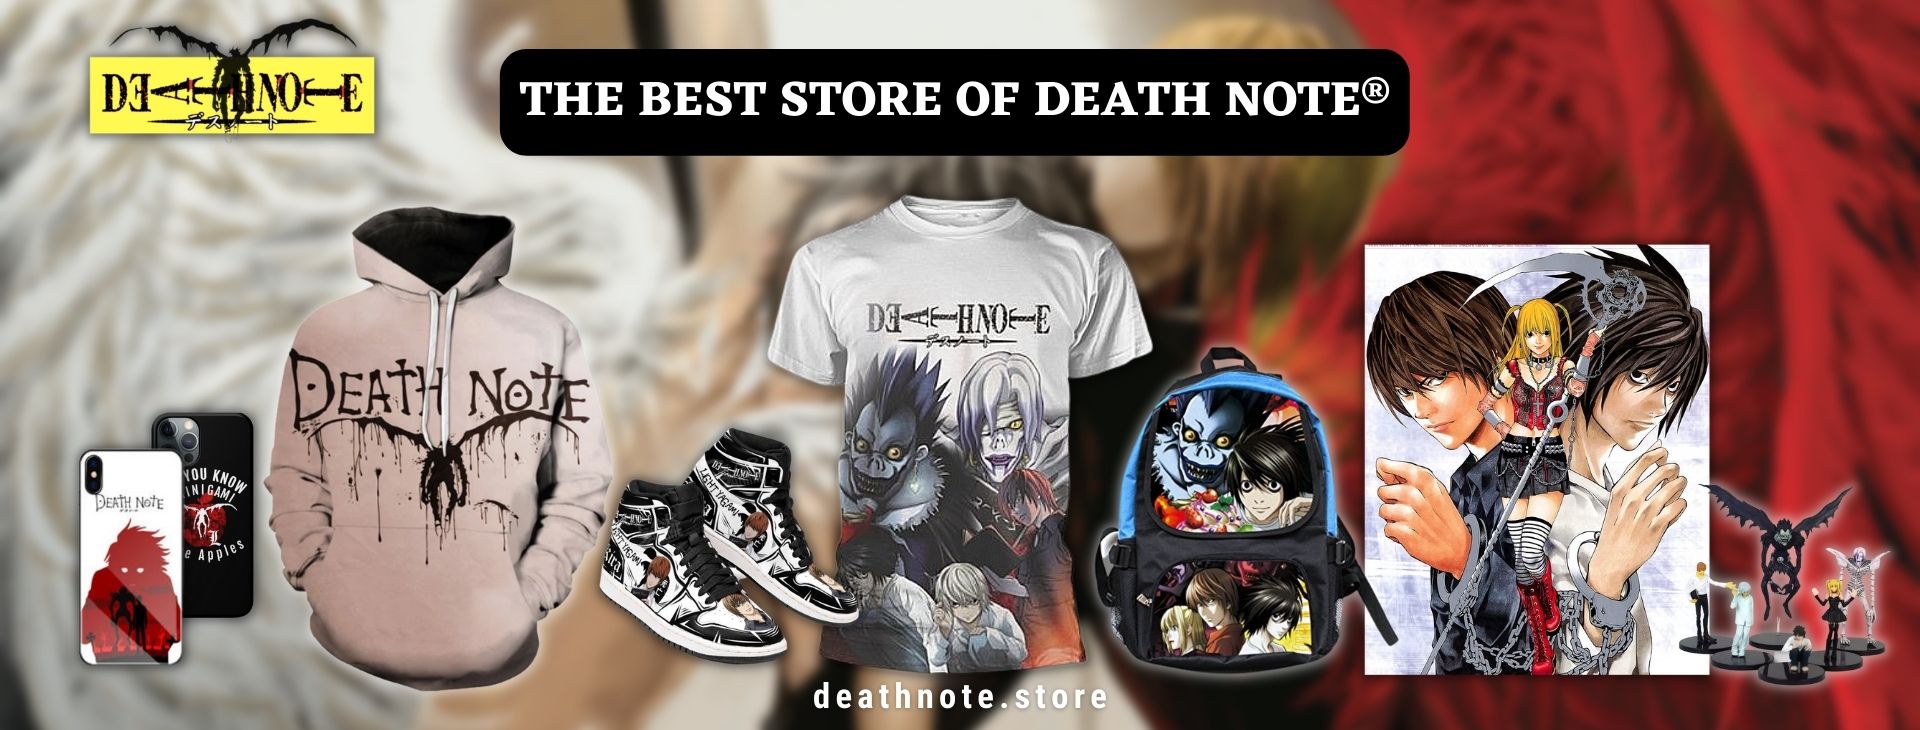 Death Note Banner - Death Note Store